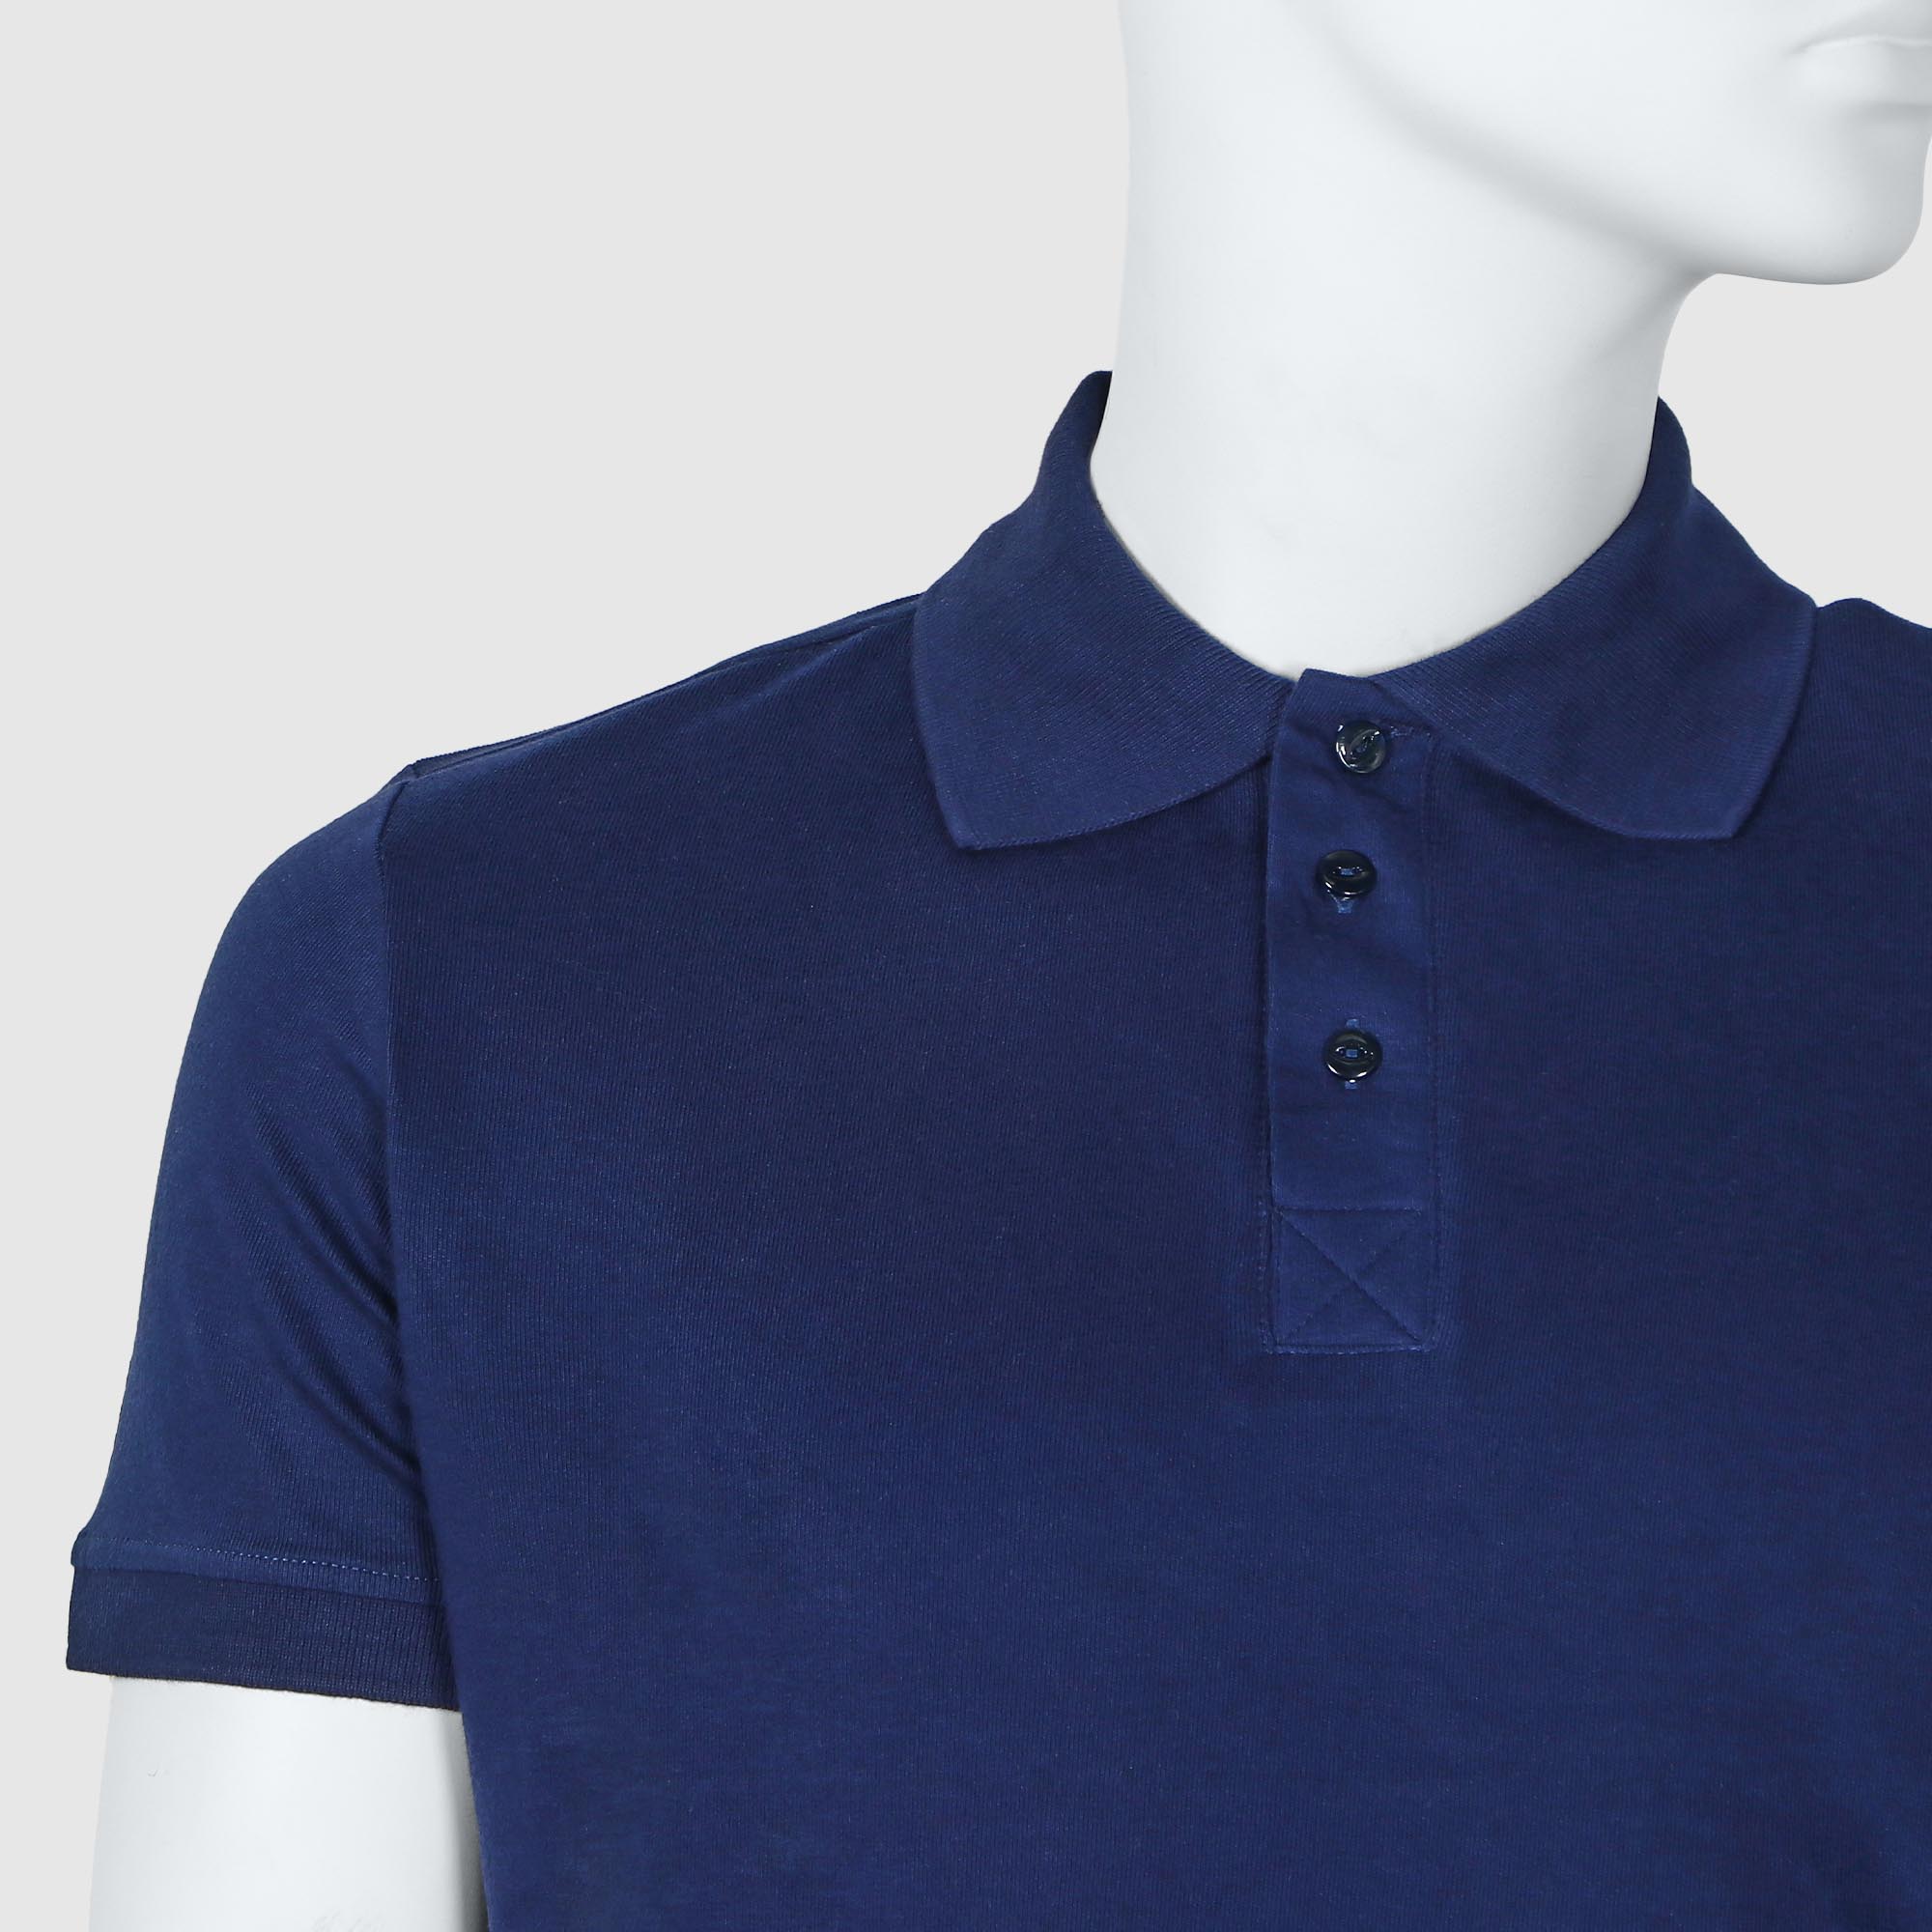 Мужская футболка-поло Diva Teks синяя (DTD-10), цвет синий, размер 52-54 - фото 3